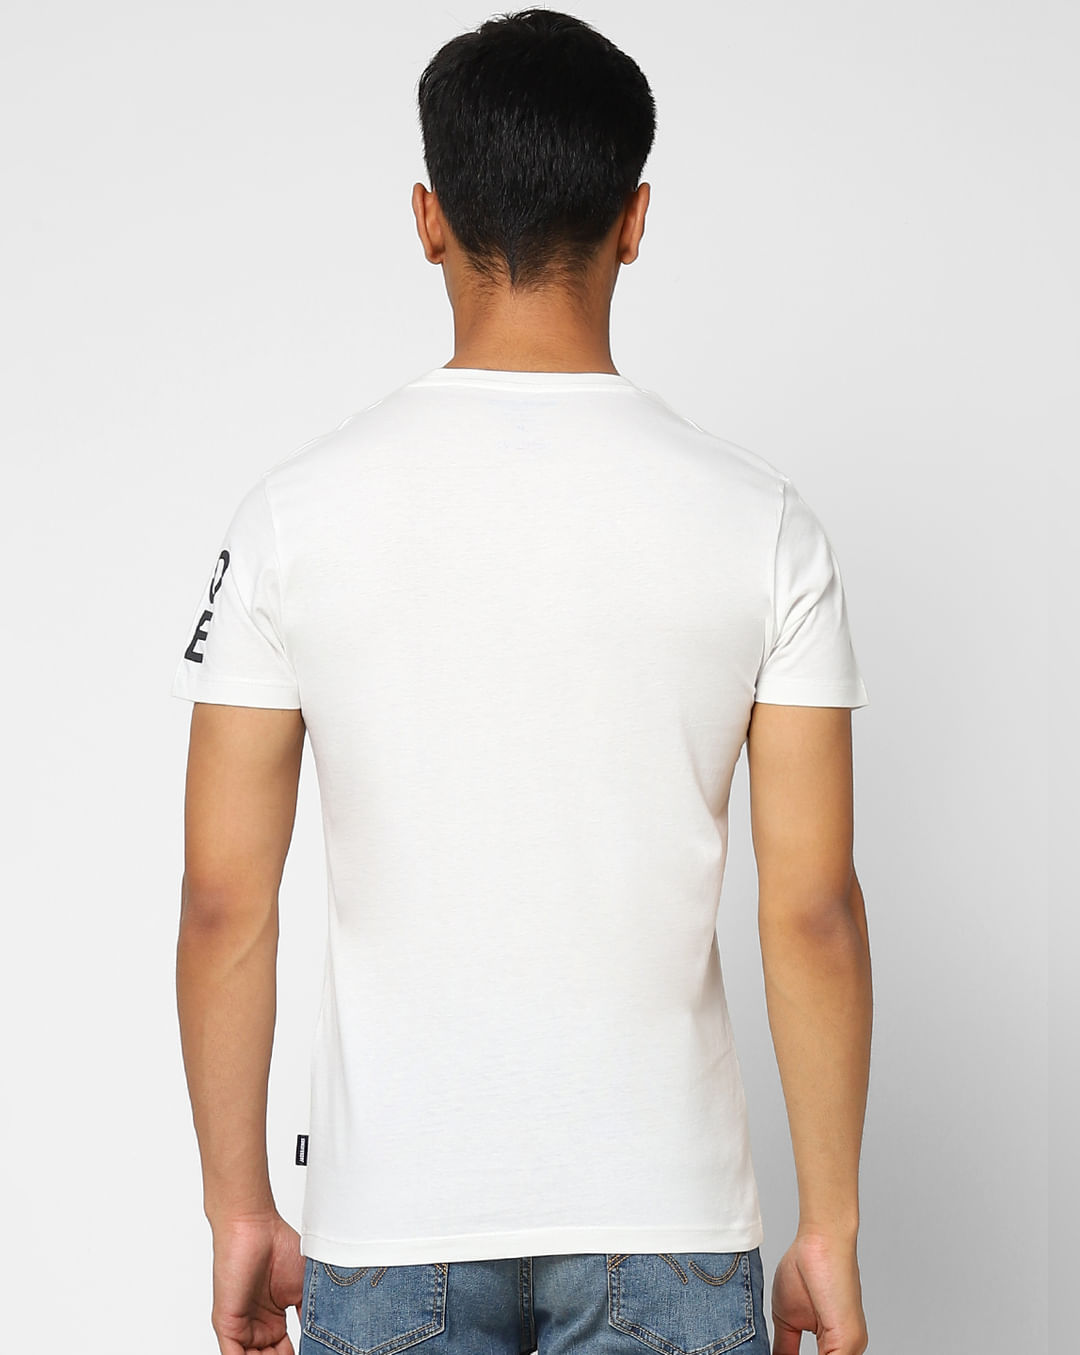 Pack of 3 Typographic Print Crew-Neck T-Shirts